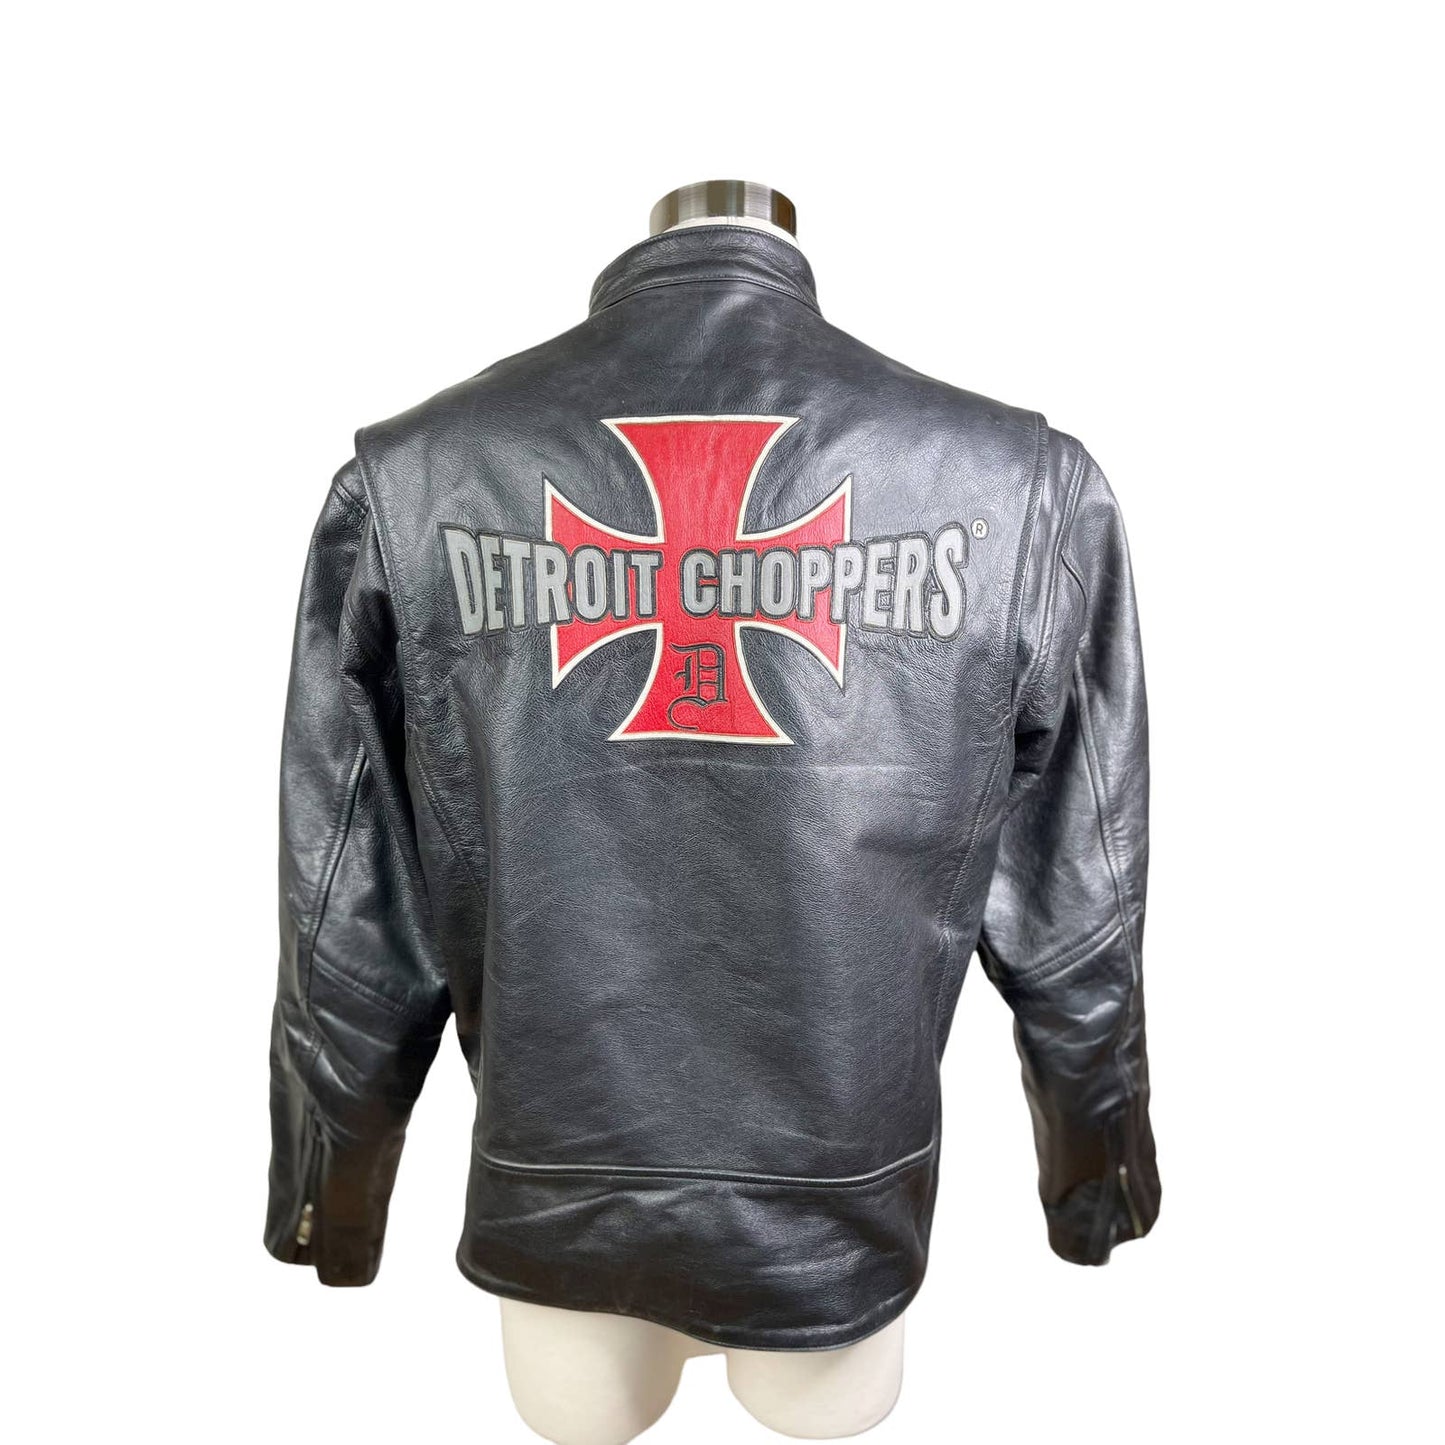 detroit choppersDetroit Choppers Mens Motorcycle Jacket Black Leather Iconic D Templar Cross - Black Dog Vintage